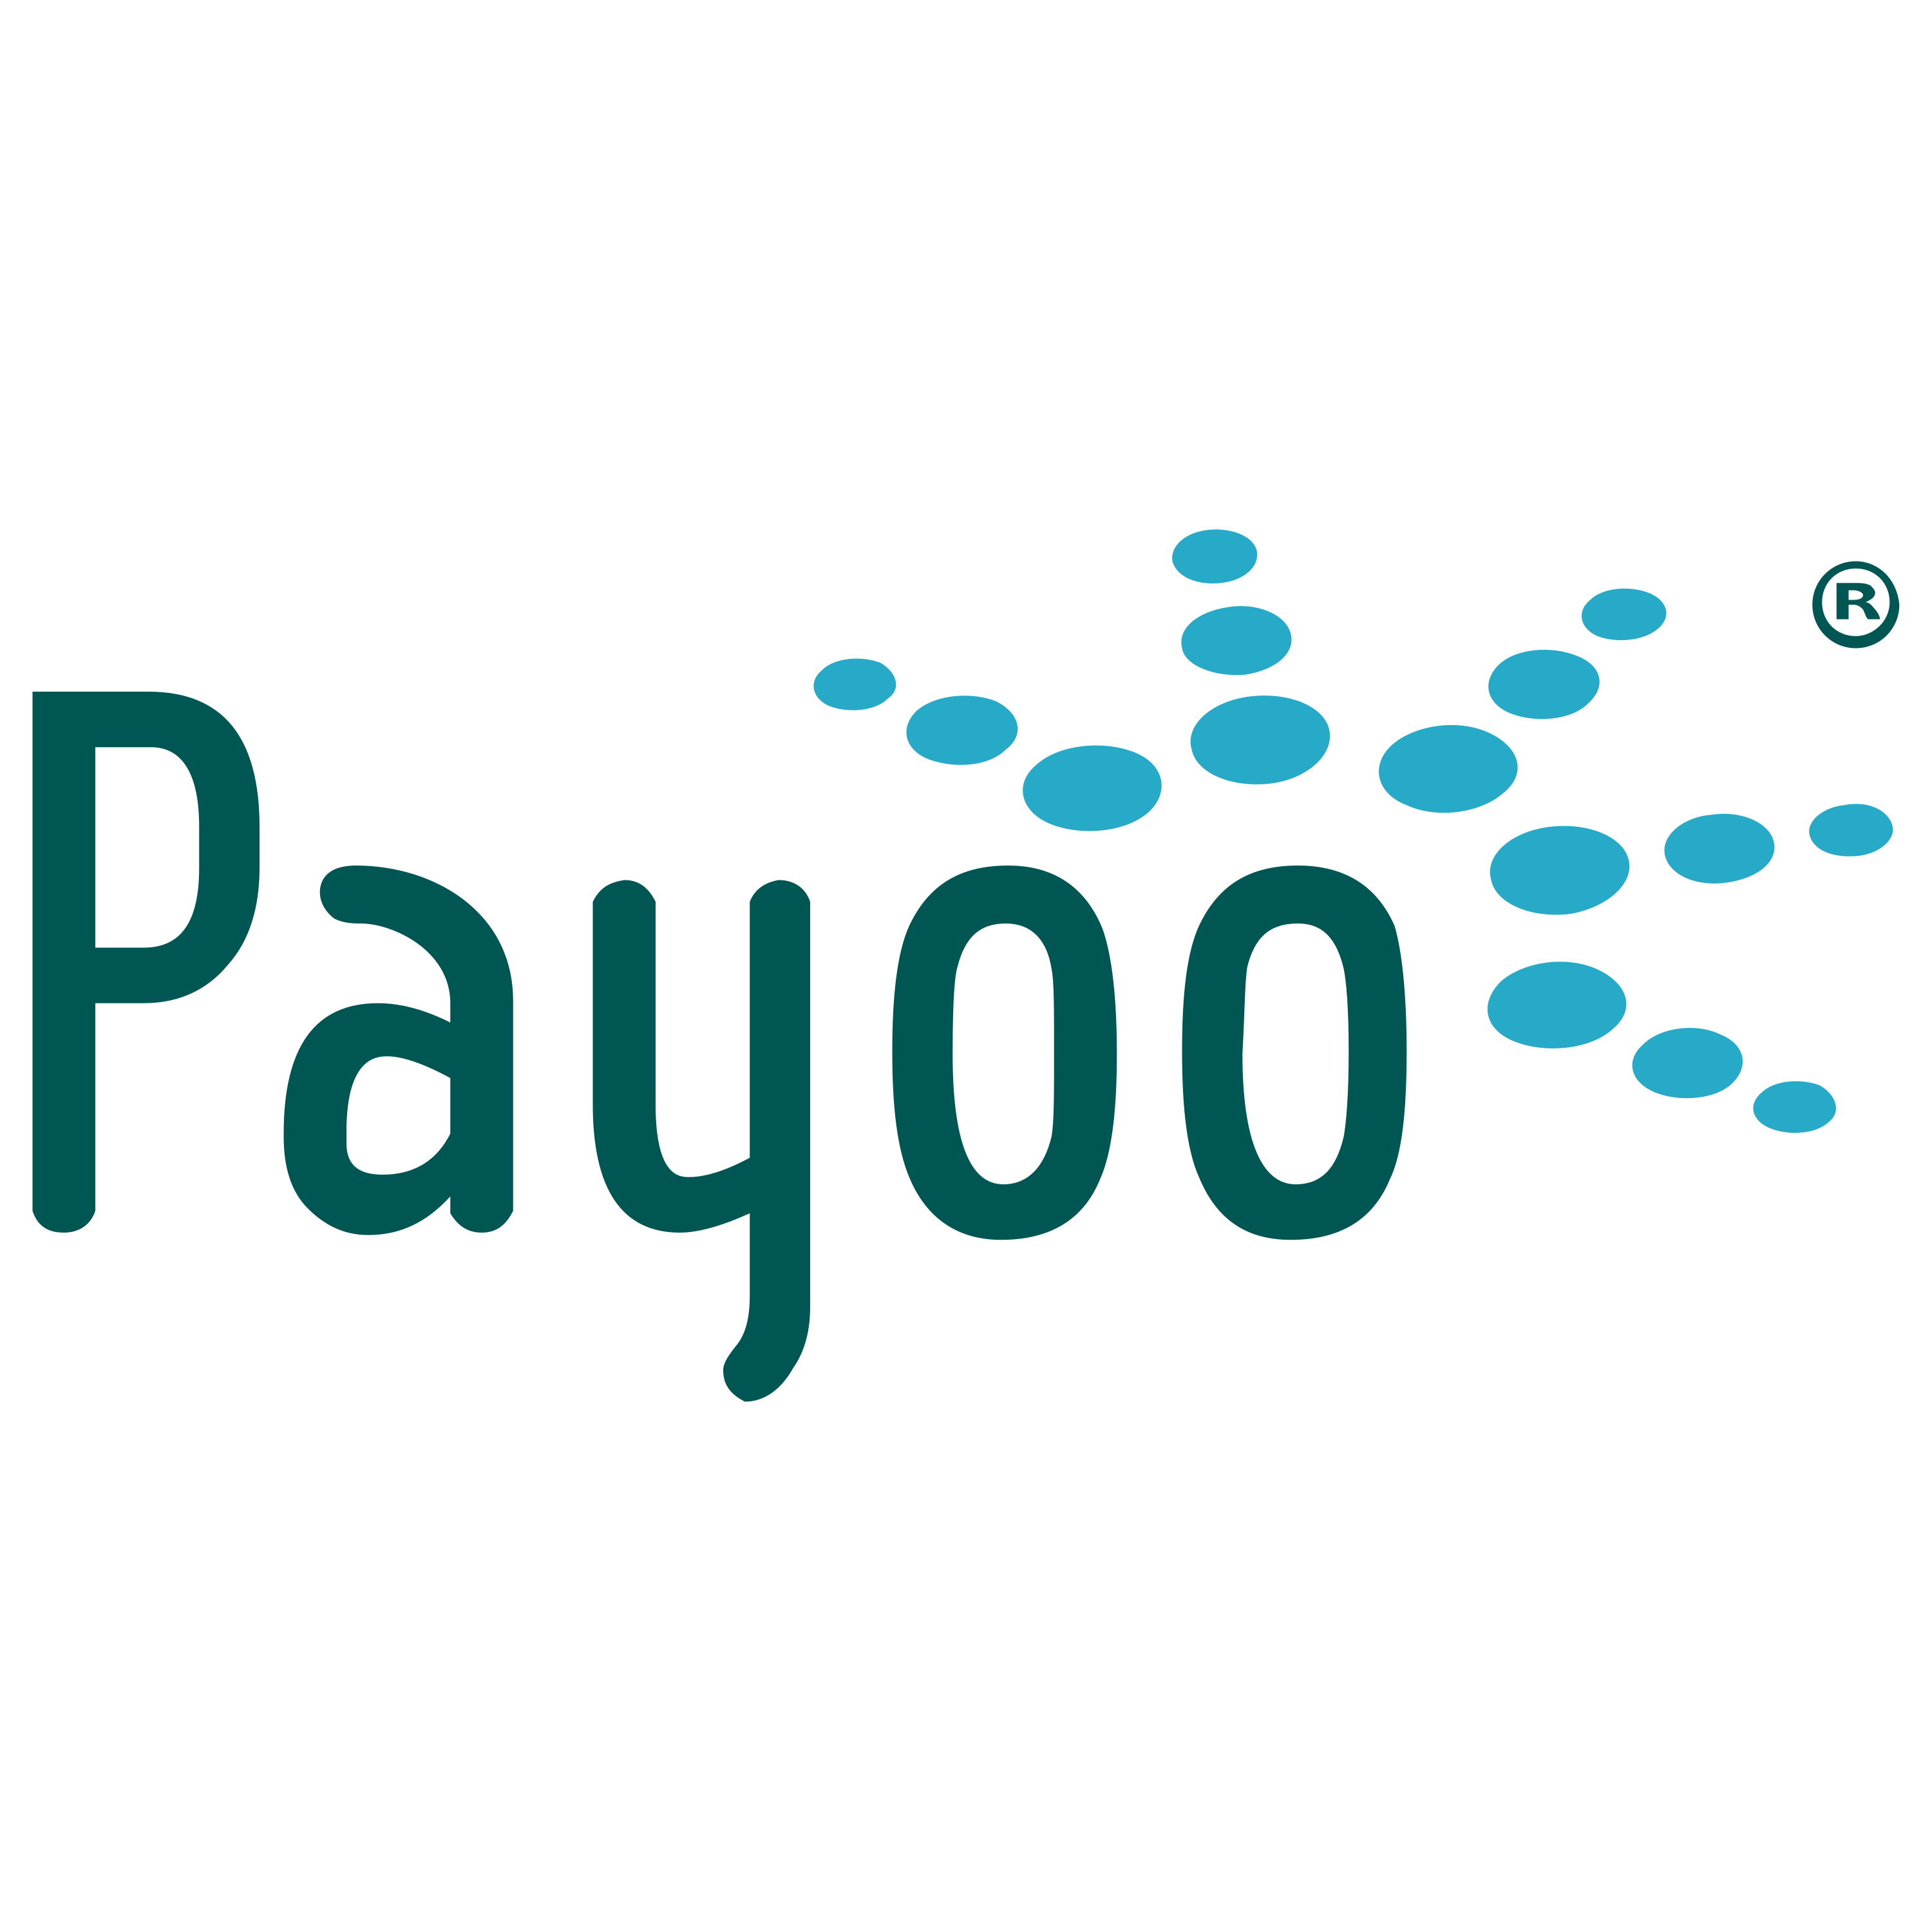 Payoo Logo Transparent Picture